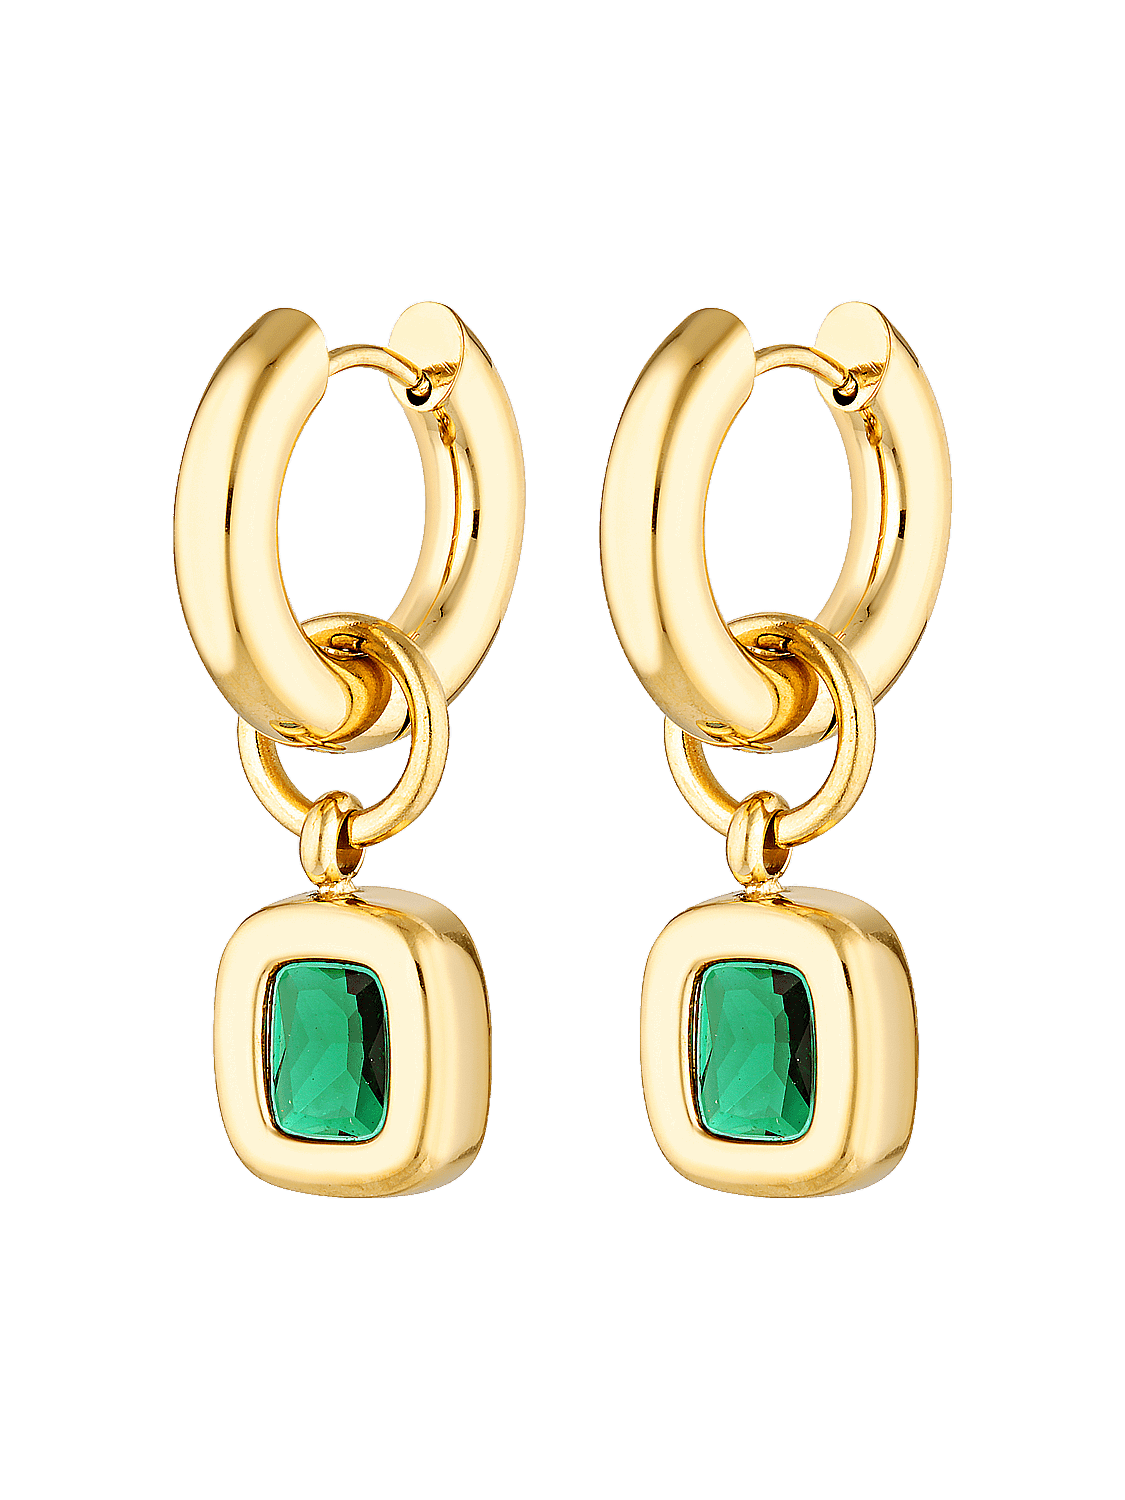 18k gold filled hoop earrings